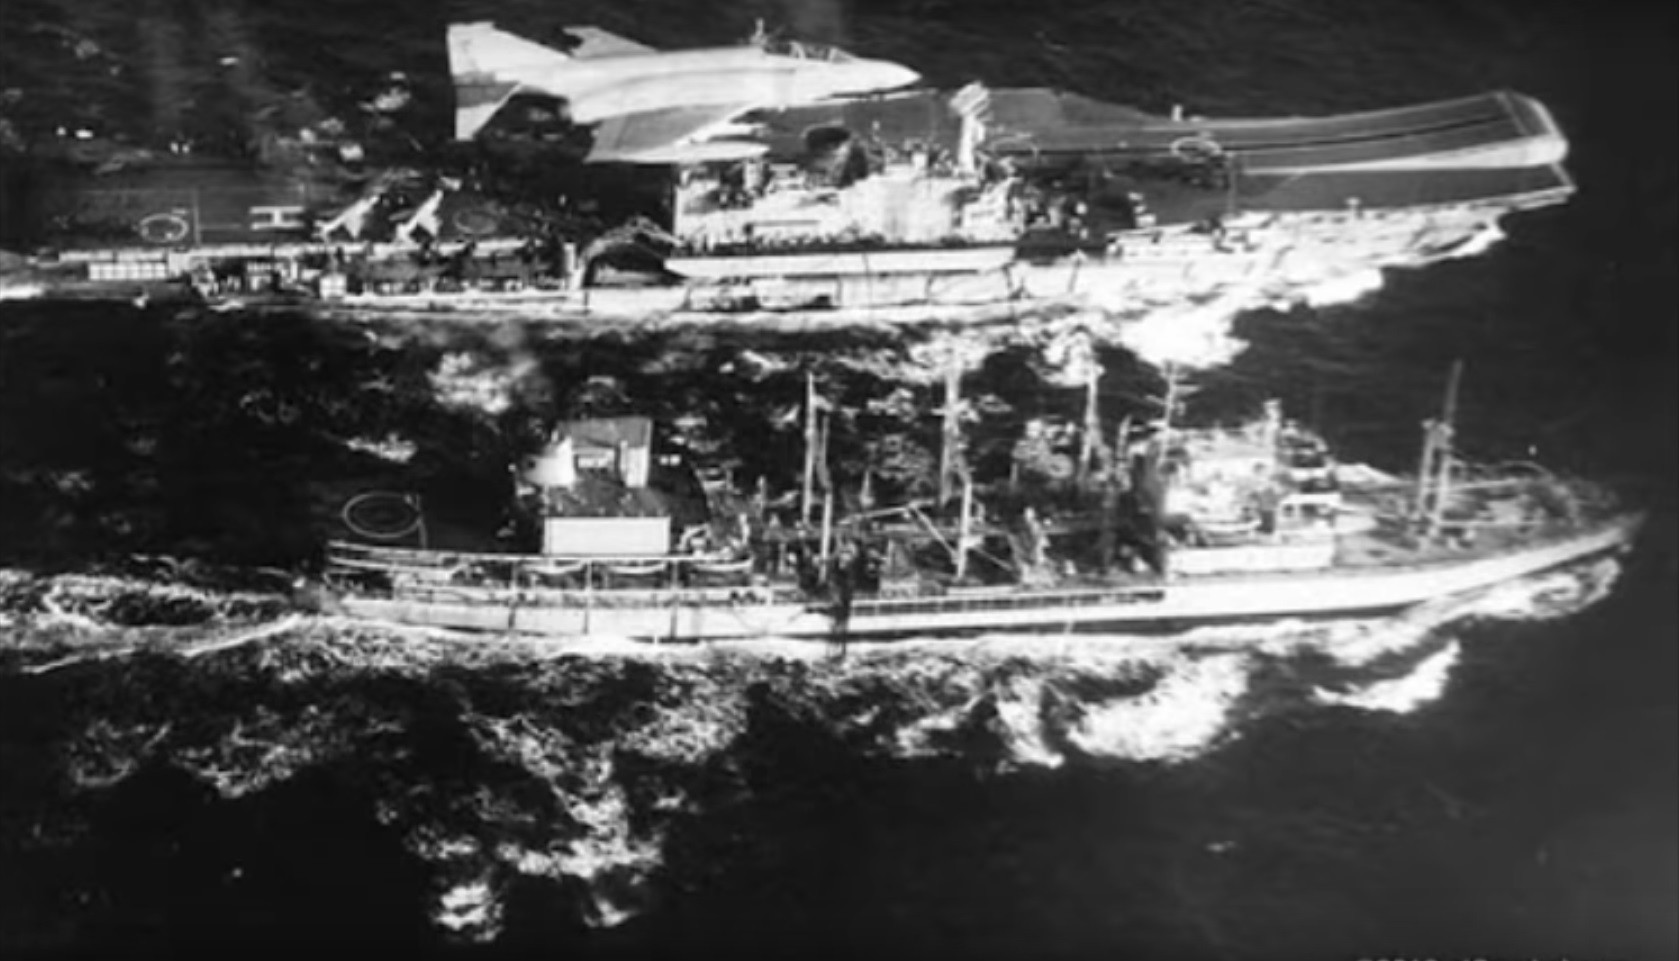 Nosač zrakoplova HMS Hermes i transportni brod Tidespring RFA snimljeni s Tu-95 pukovnika Bulbenkova.